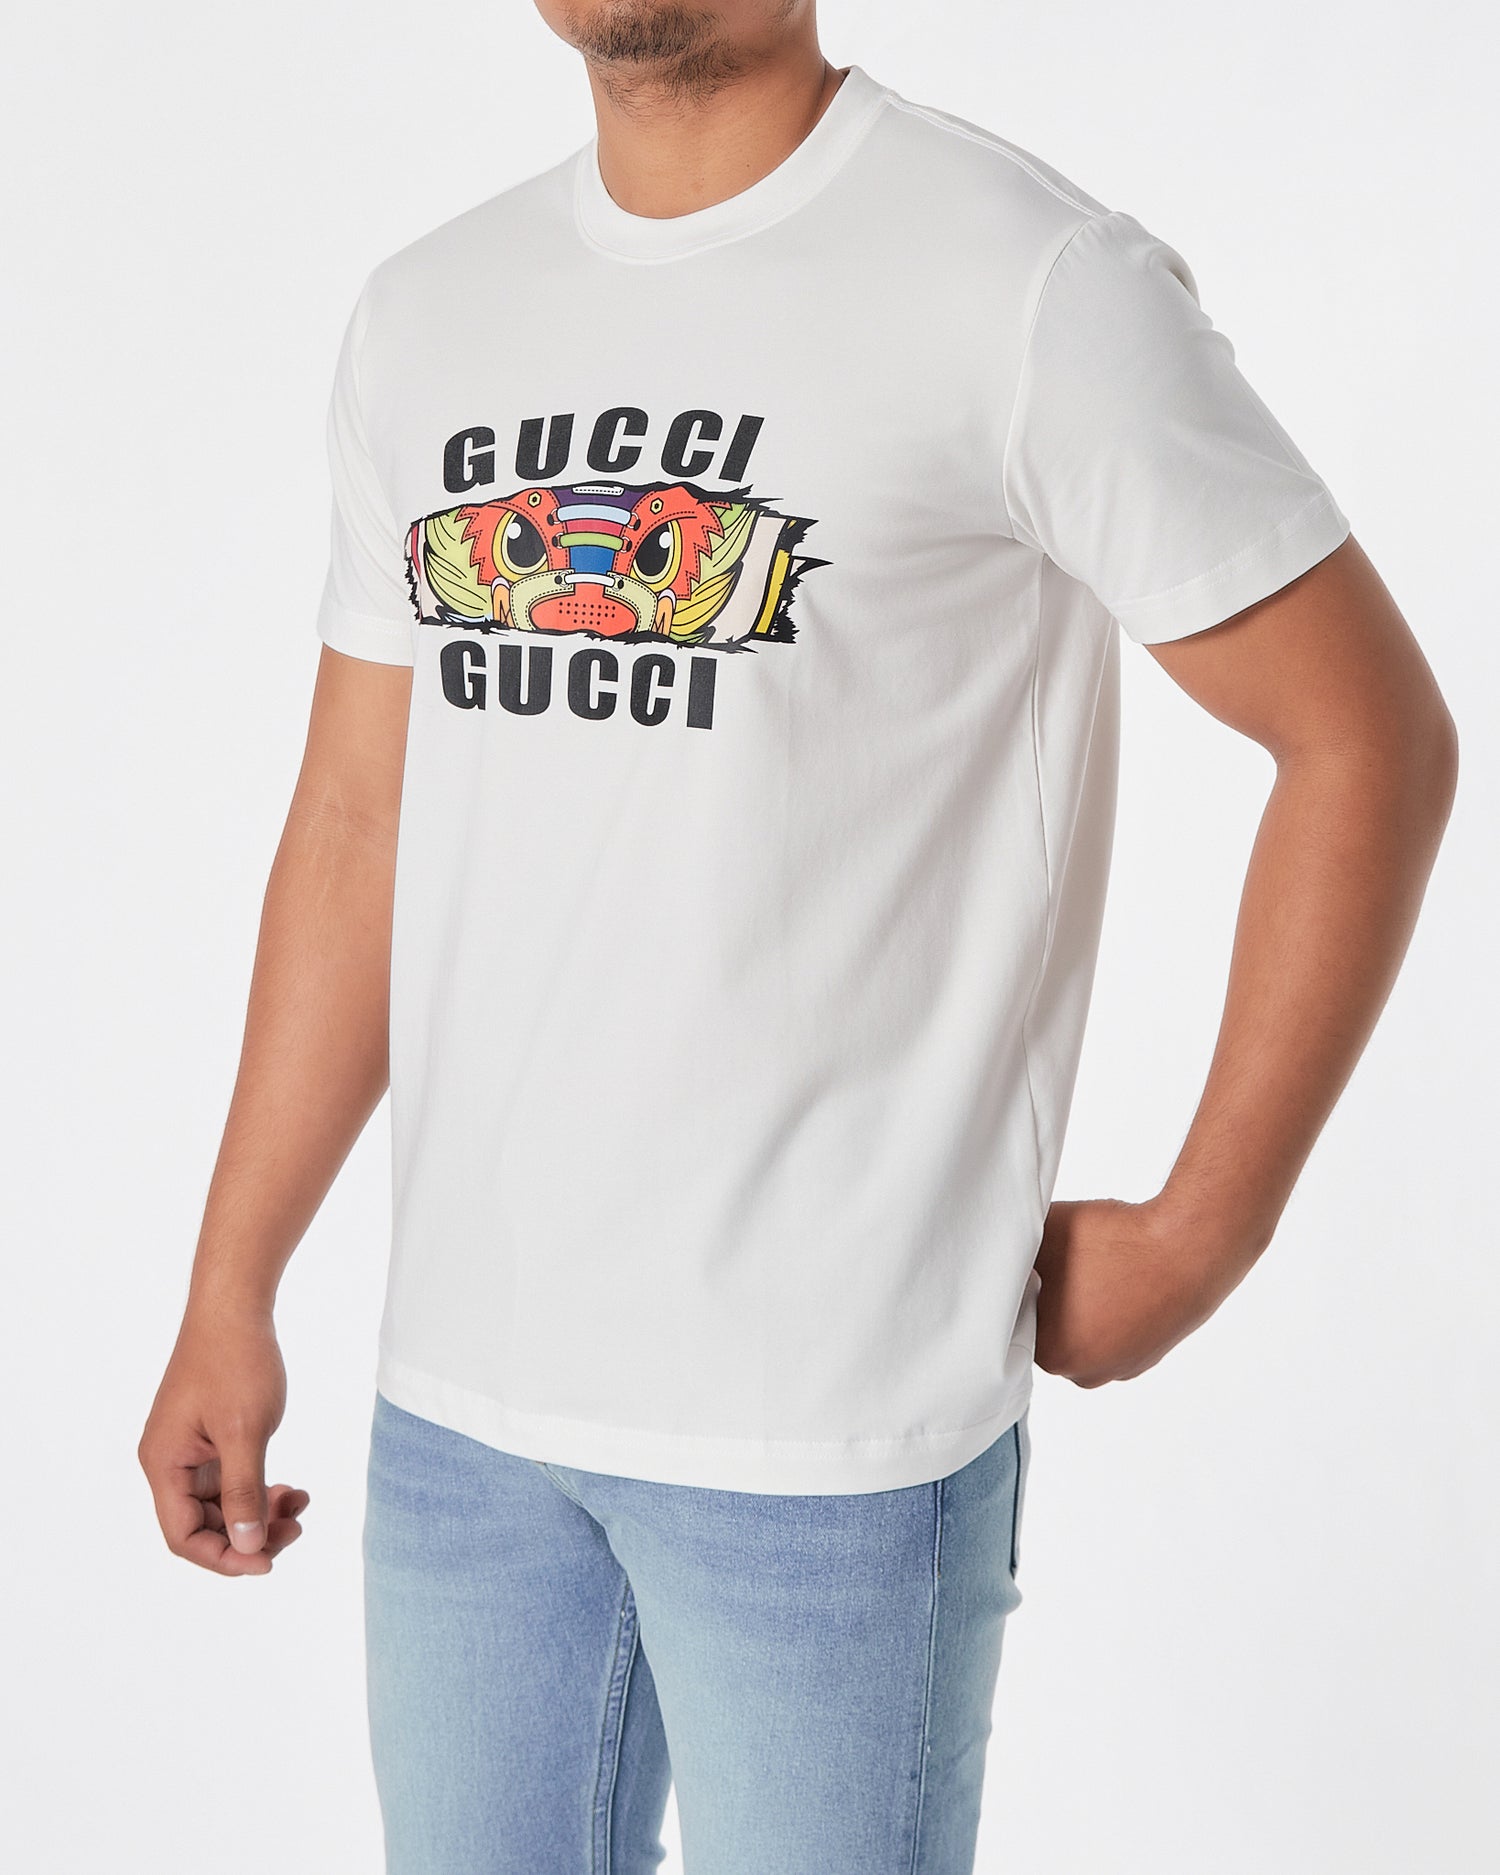 GUC Dragon Printed Men White T-Shirt 16.90